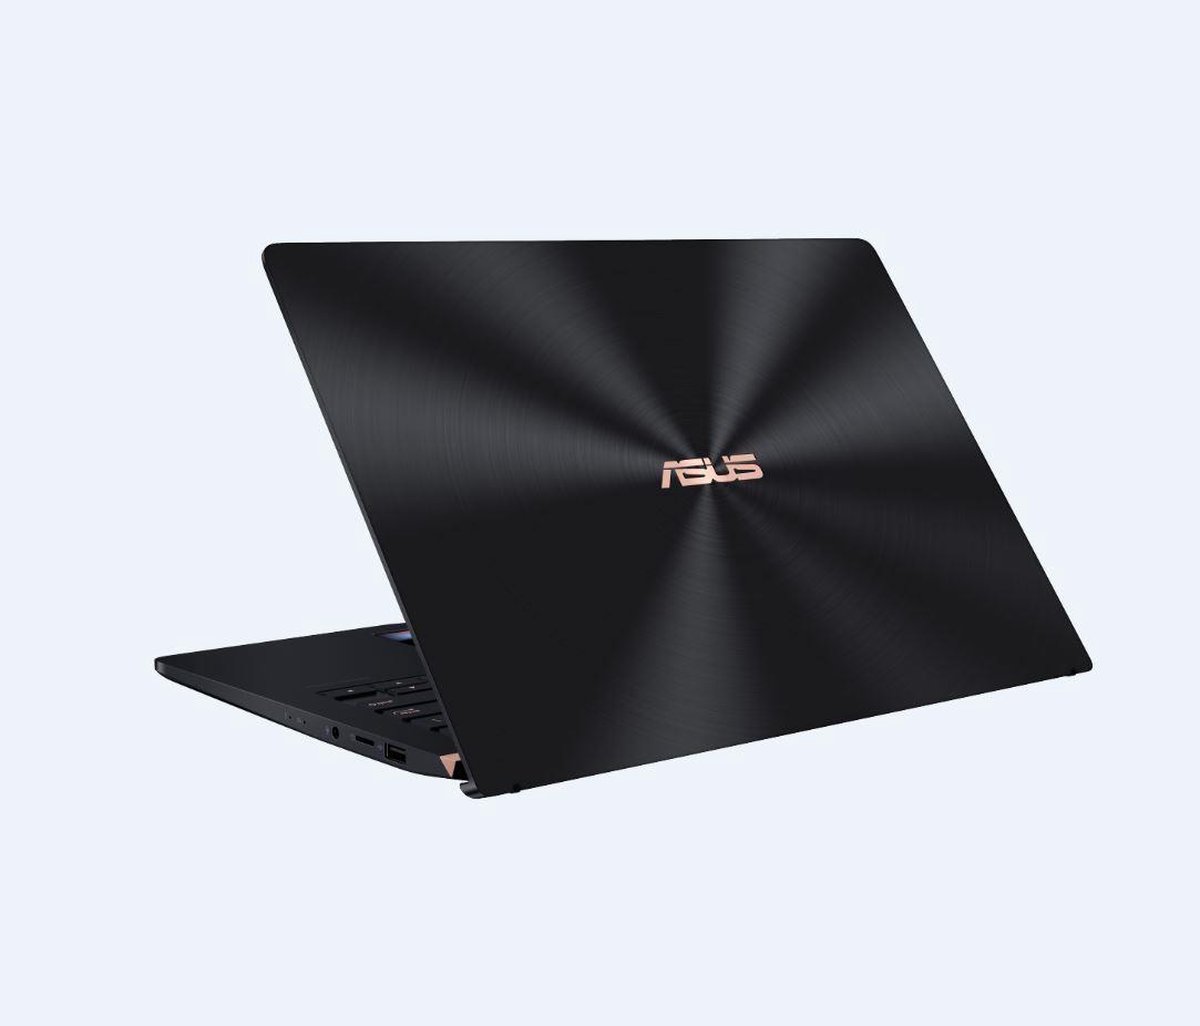 Asus ZenBook Pro UX480FD-BE023T - Laptop - 14 Inch | bol